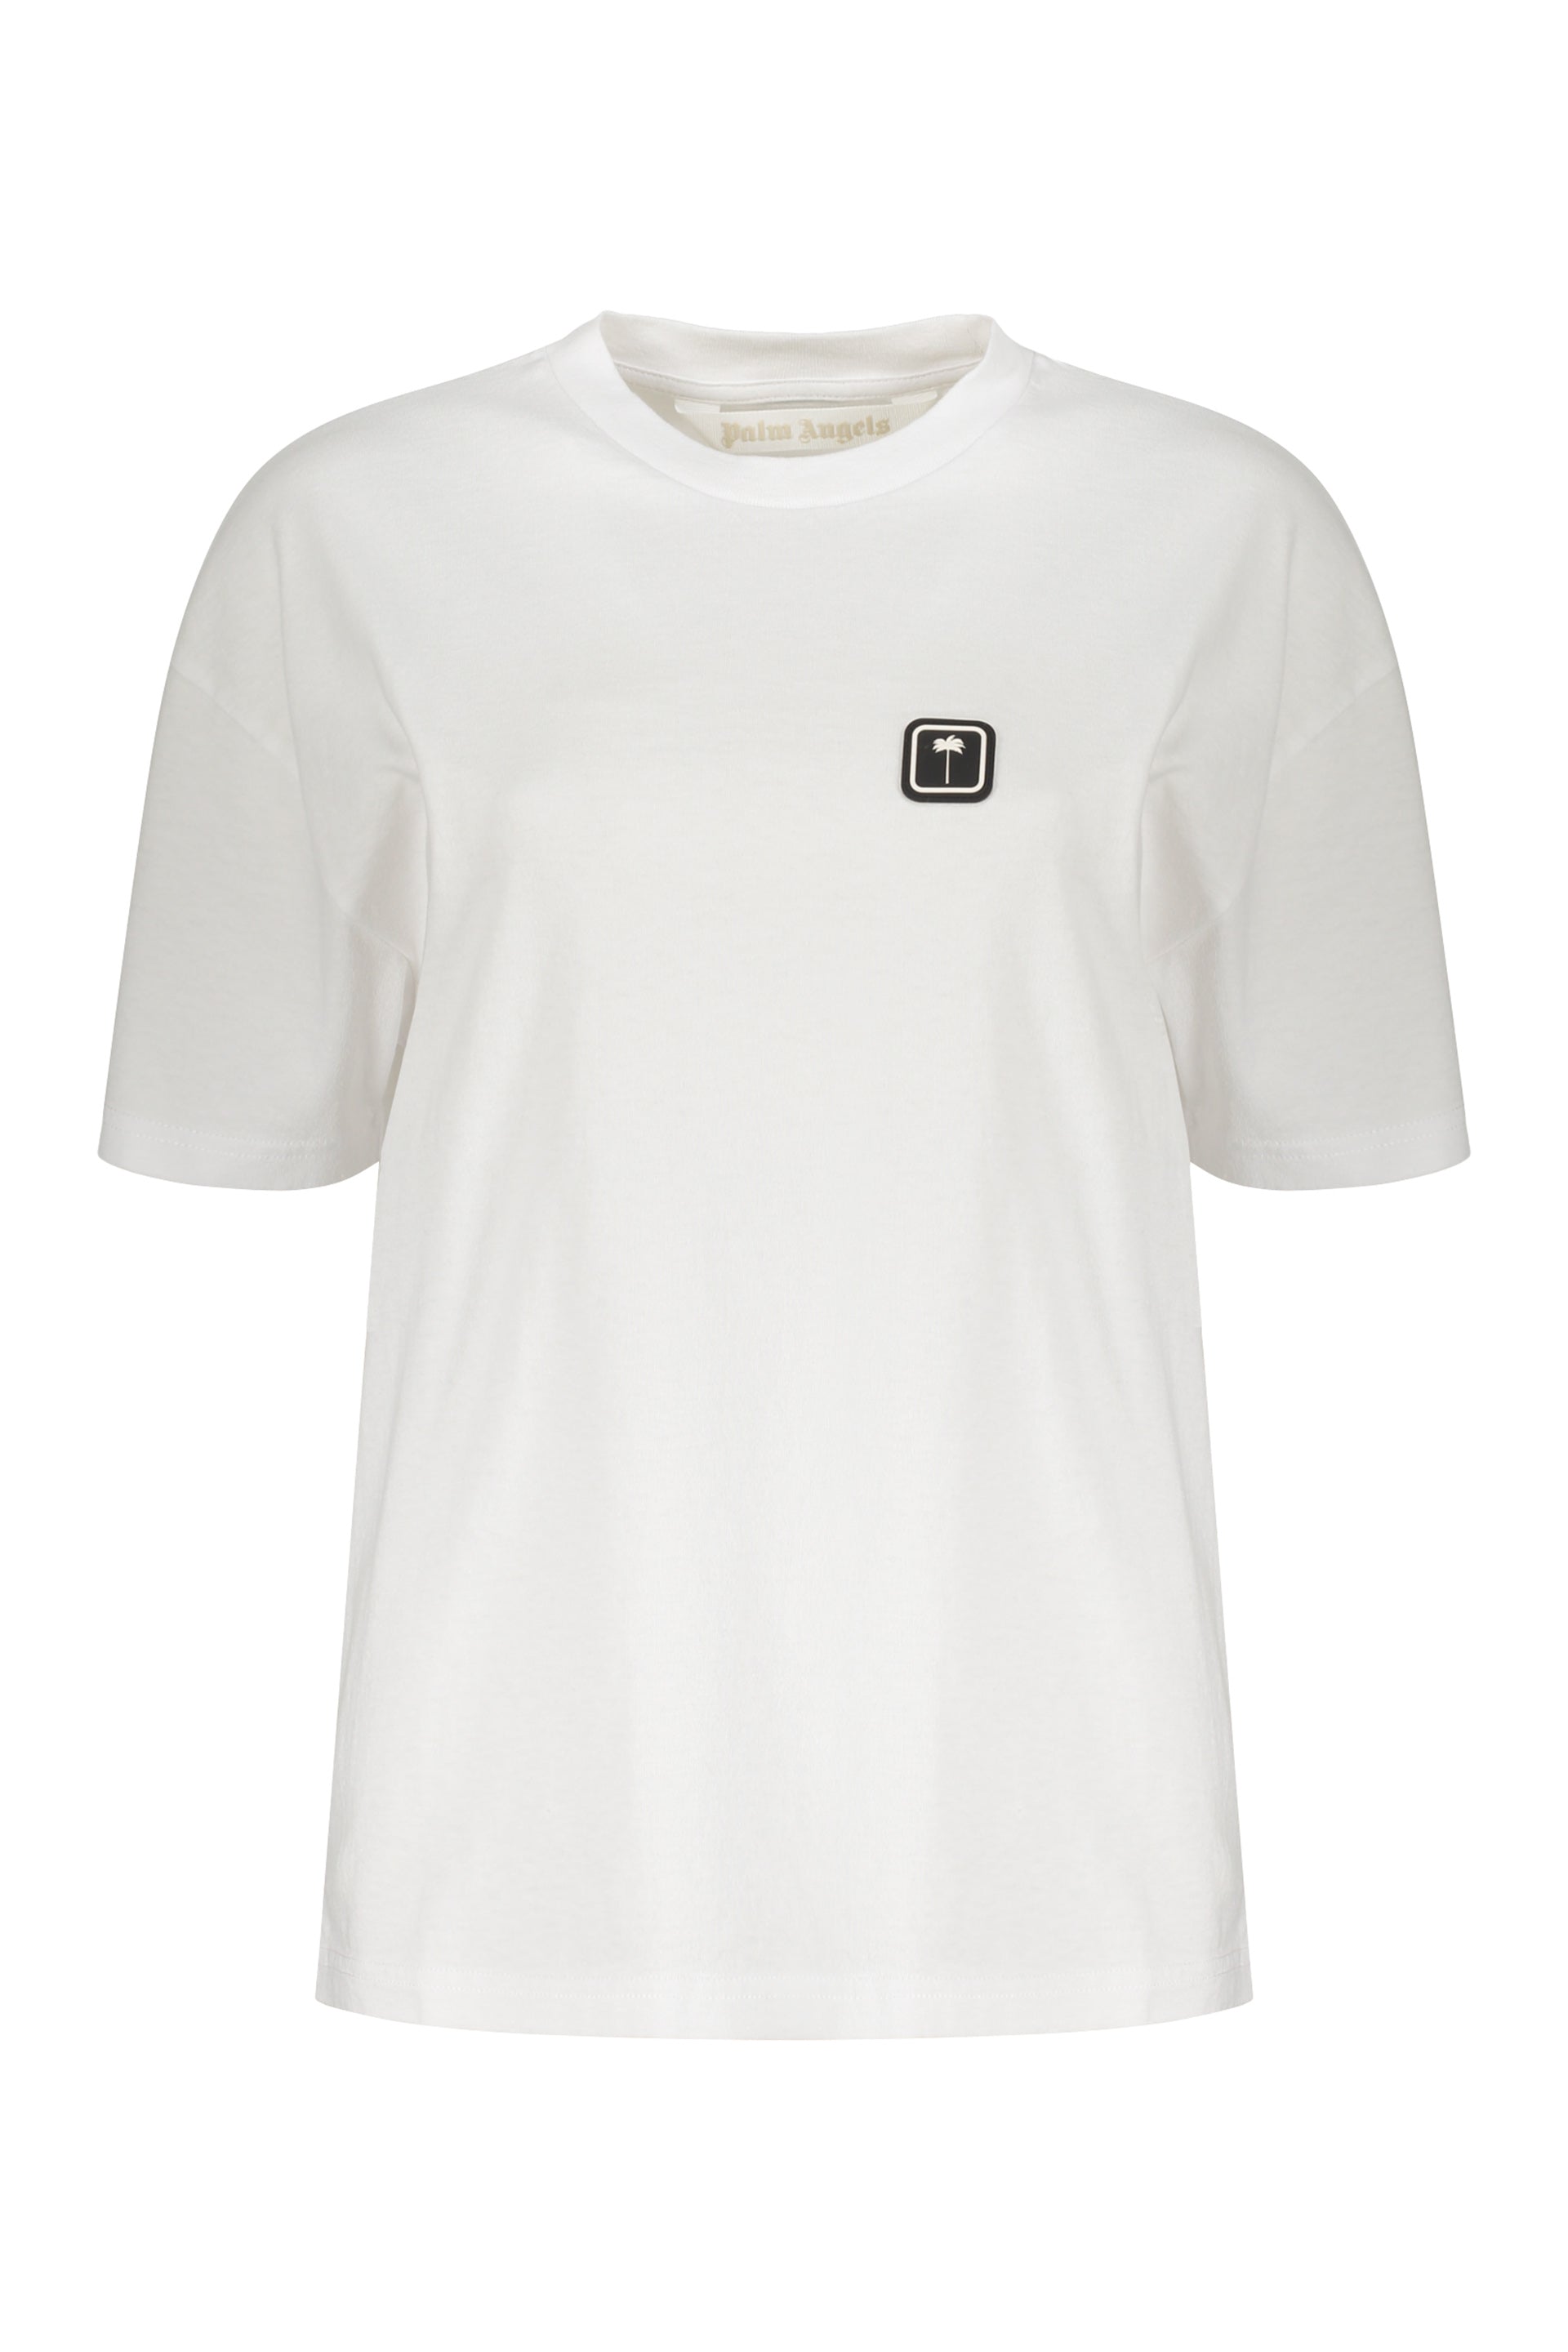 Palm-Angels-OUTLET-SALE-Cotton-T-shirt-Shirts-XS-ARCHIVE-COLLECTION_b35996ef-3b07-4a6f-961c-1ec80569685a.jpg